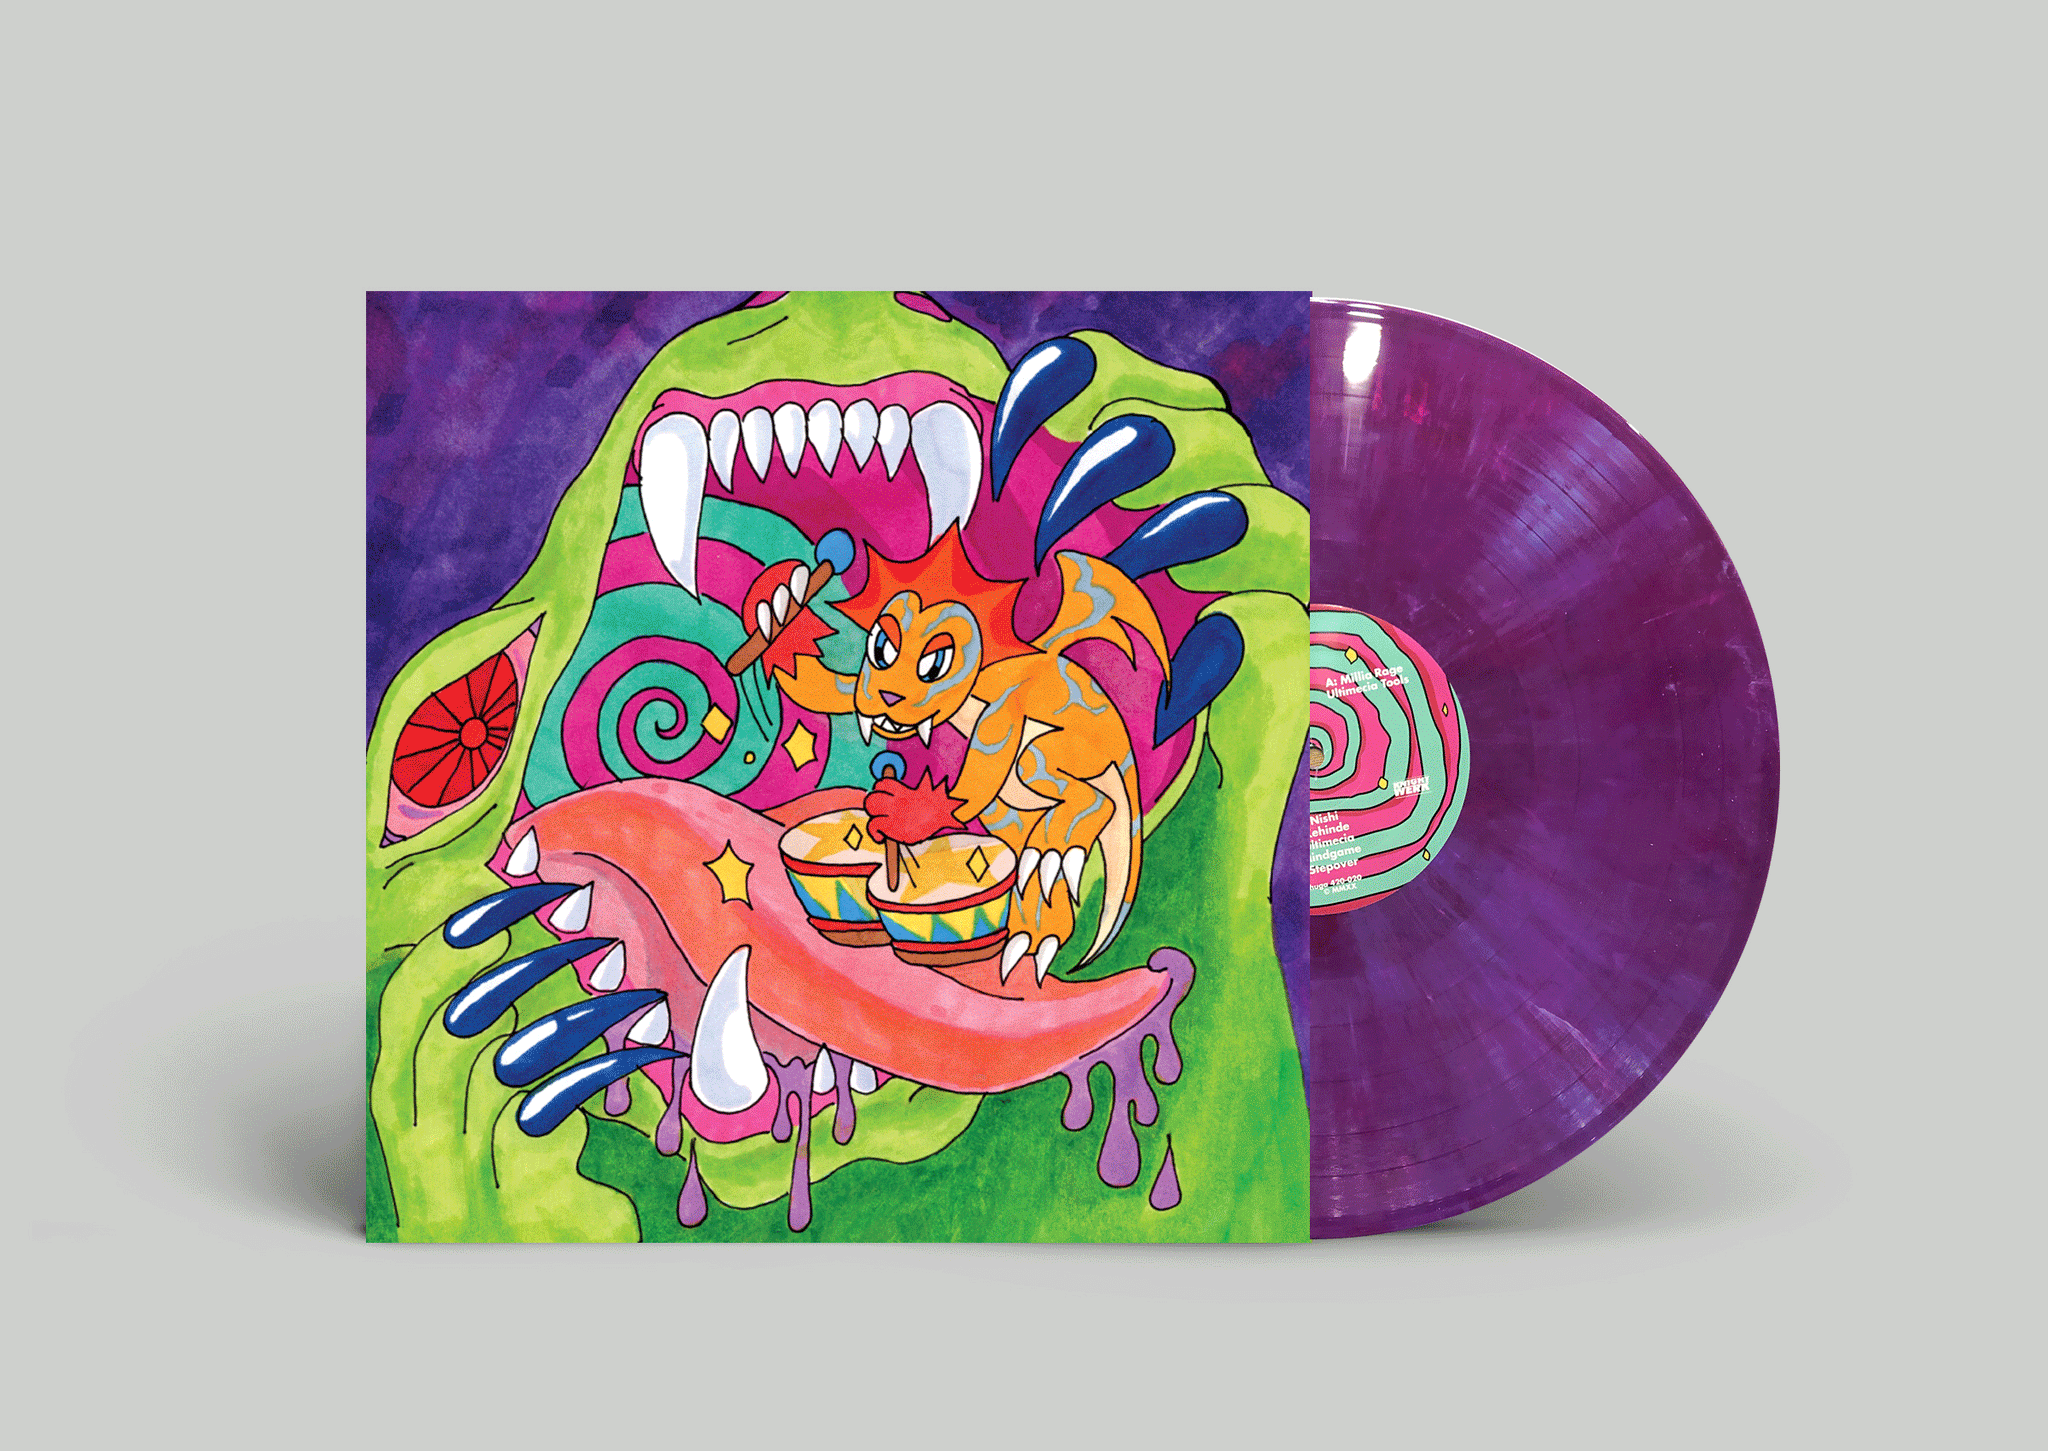 Millia Rage X Castrin - Split EP - New LP Record 2020 Shuga Records Chicago Plush Purple Vinyl - Electronic / Techno / House